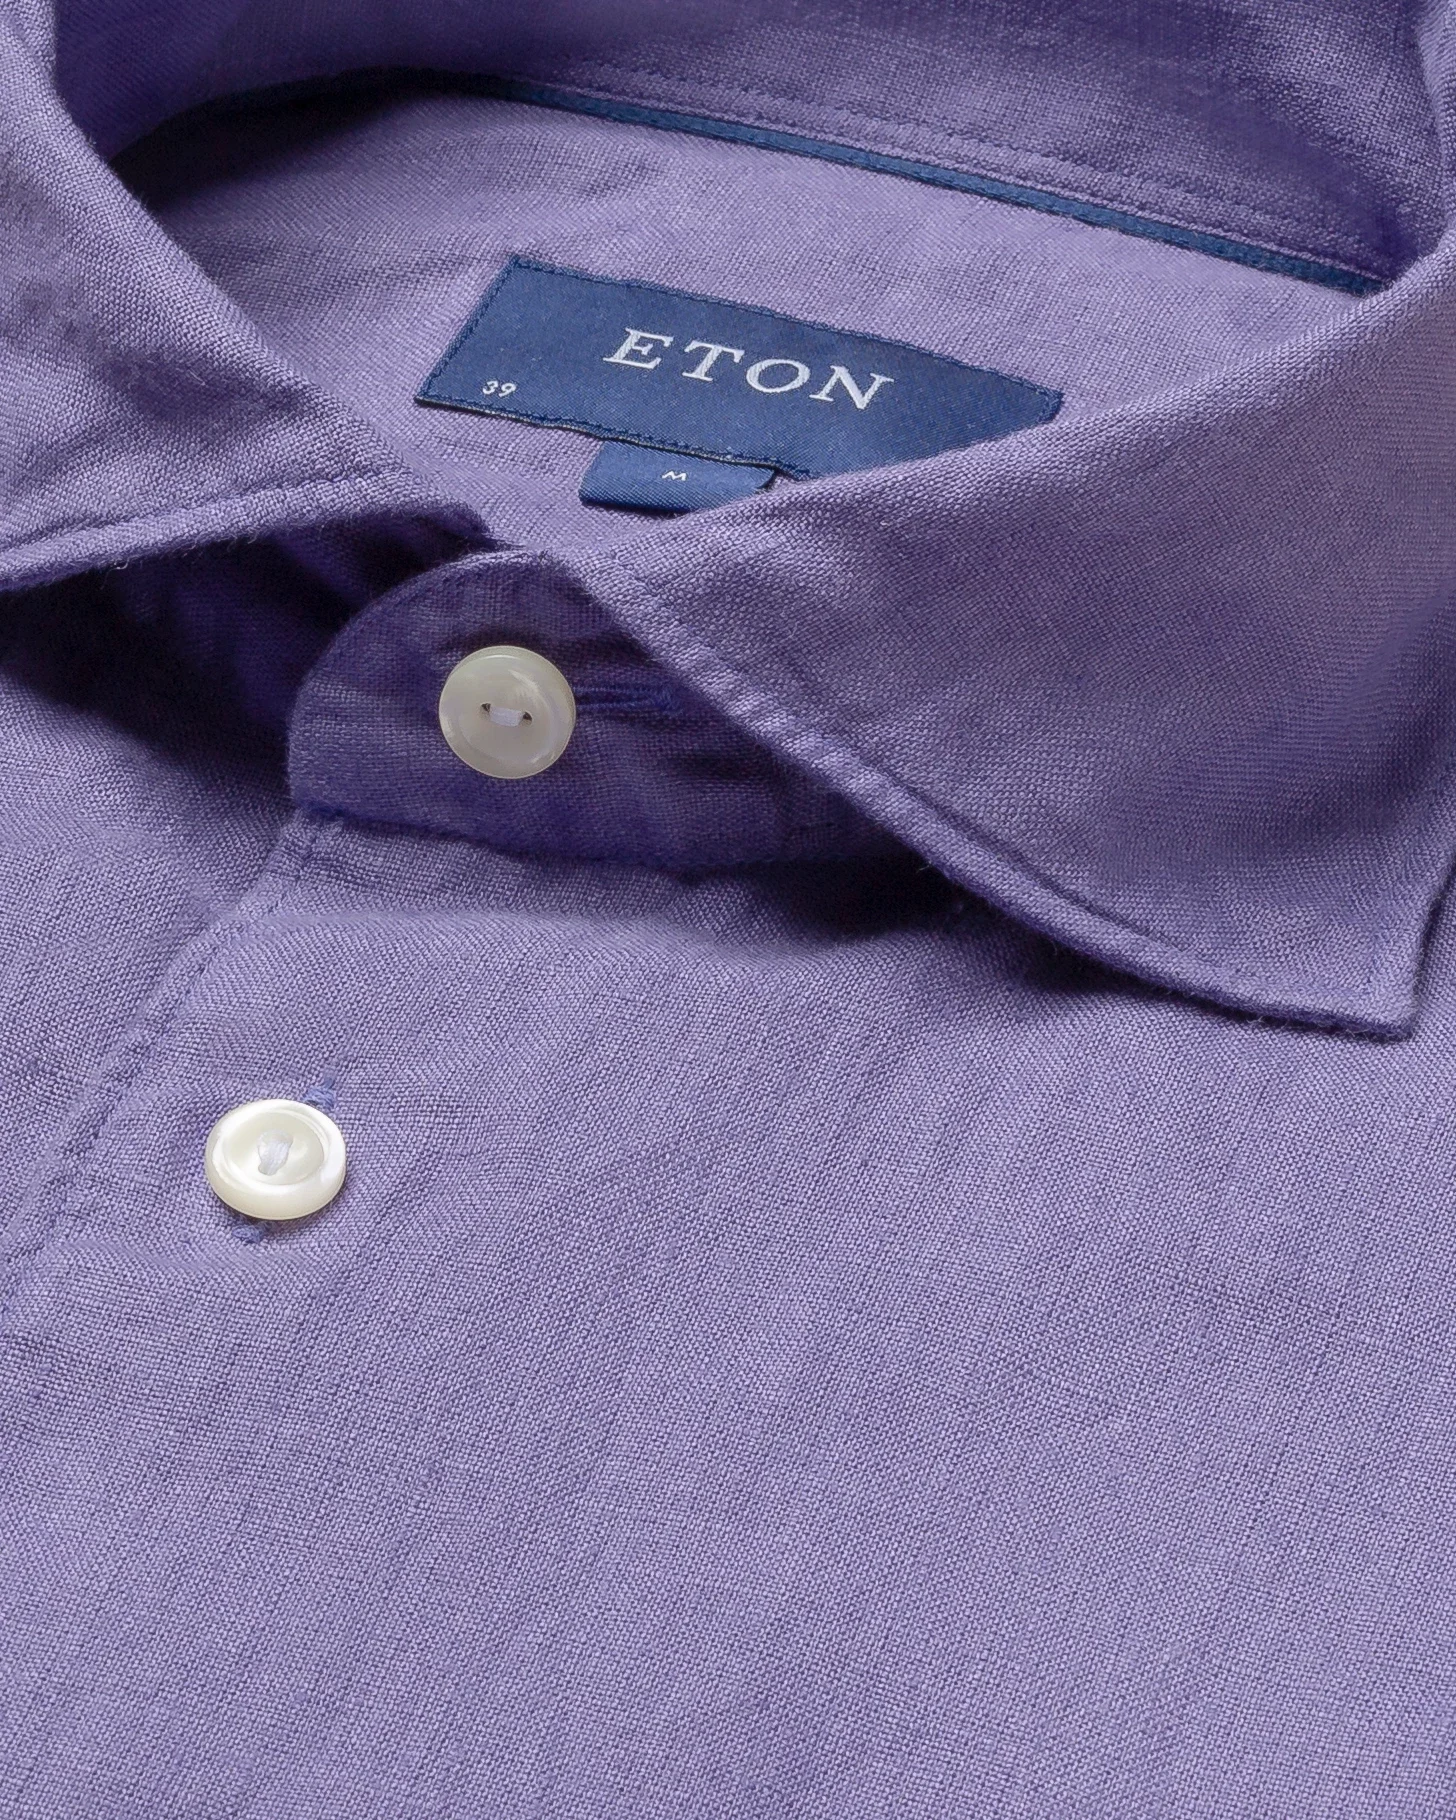 Eton - purple linen shirt soft